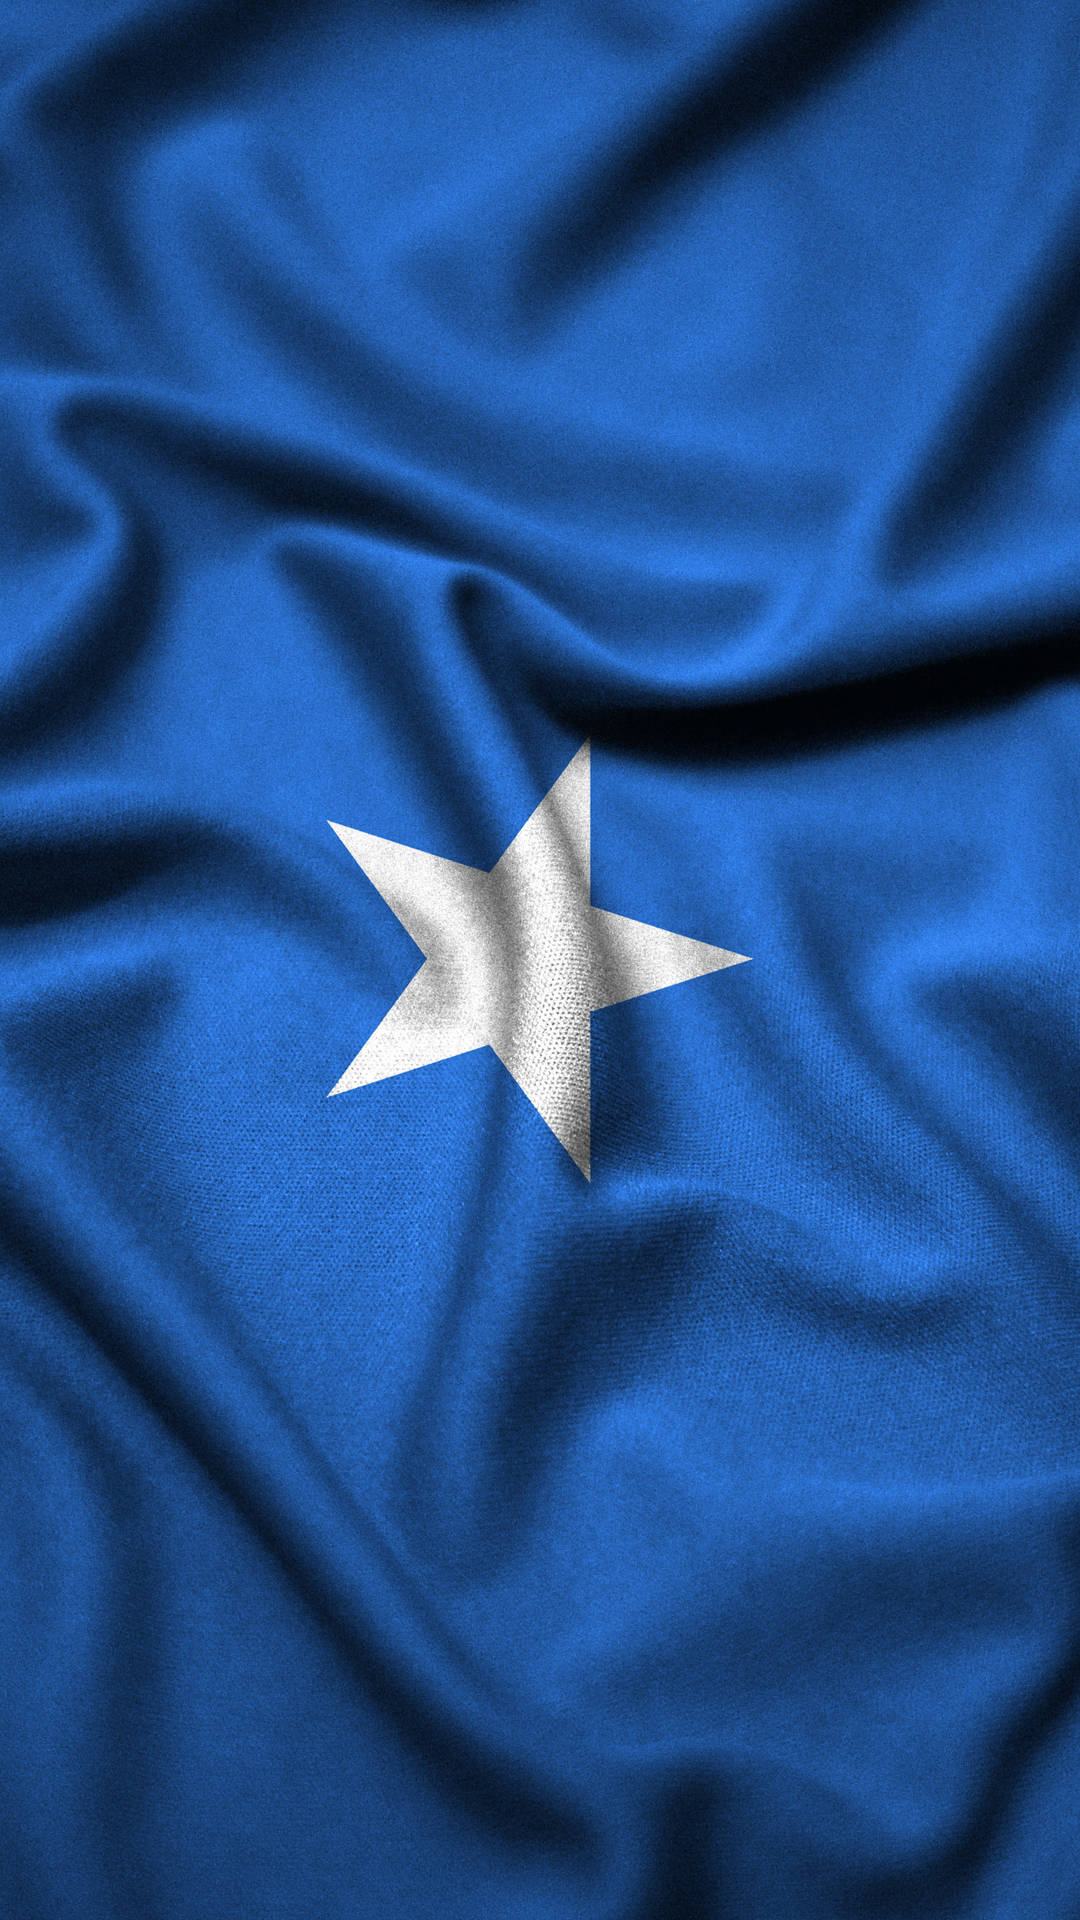 Vertical Somalia Textured Flag Background